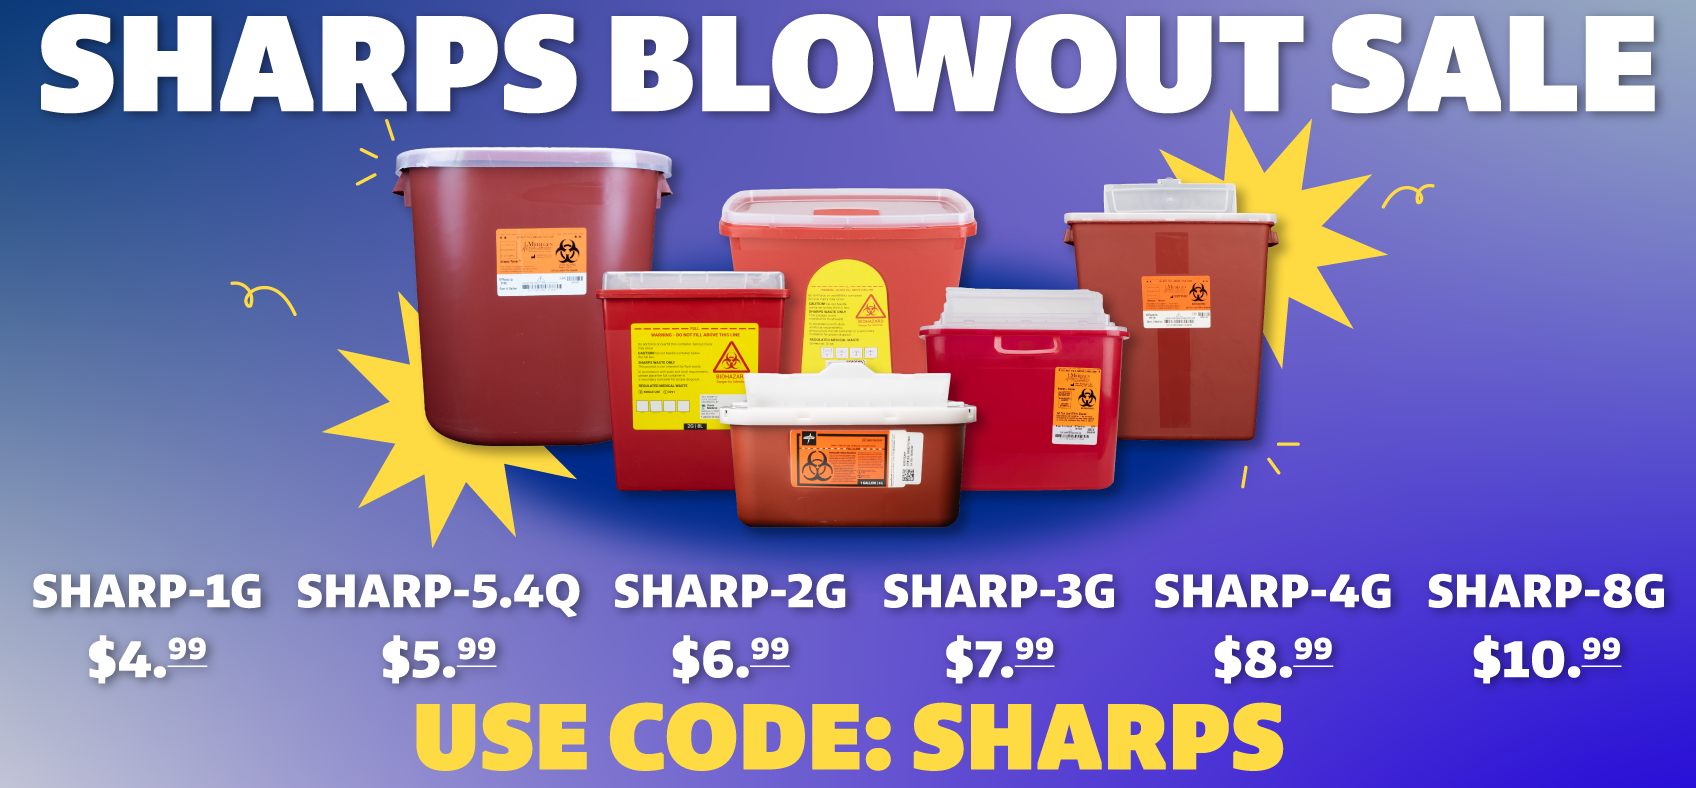 Sharps Blowout Sale!